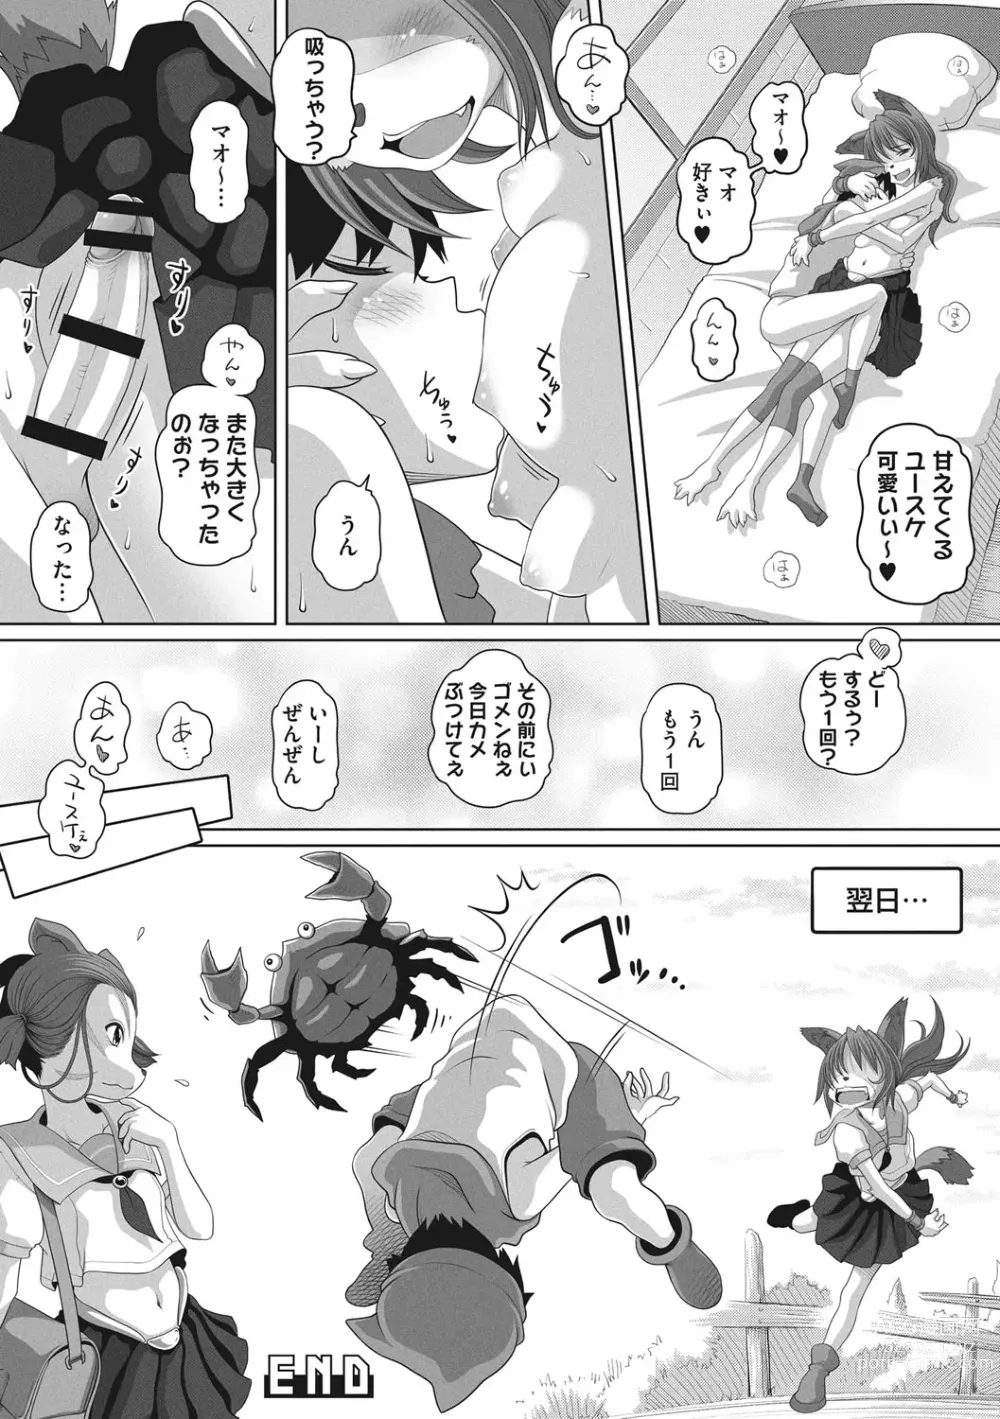 Page 177 of manga Namaiki-mori no 3 S